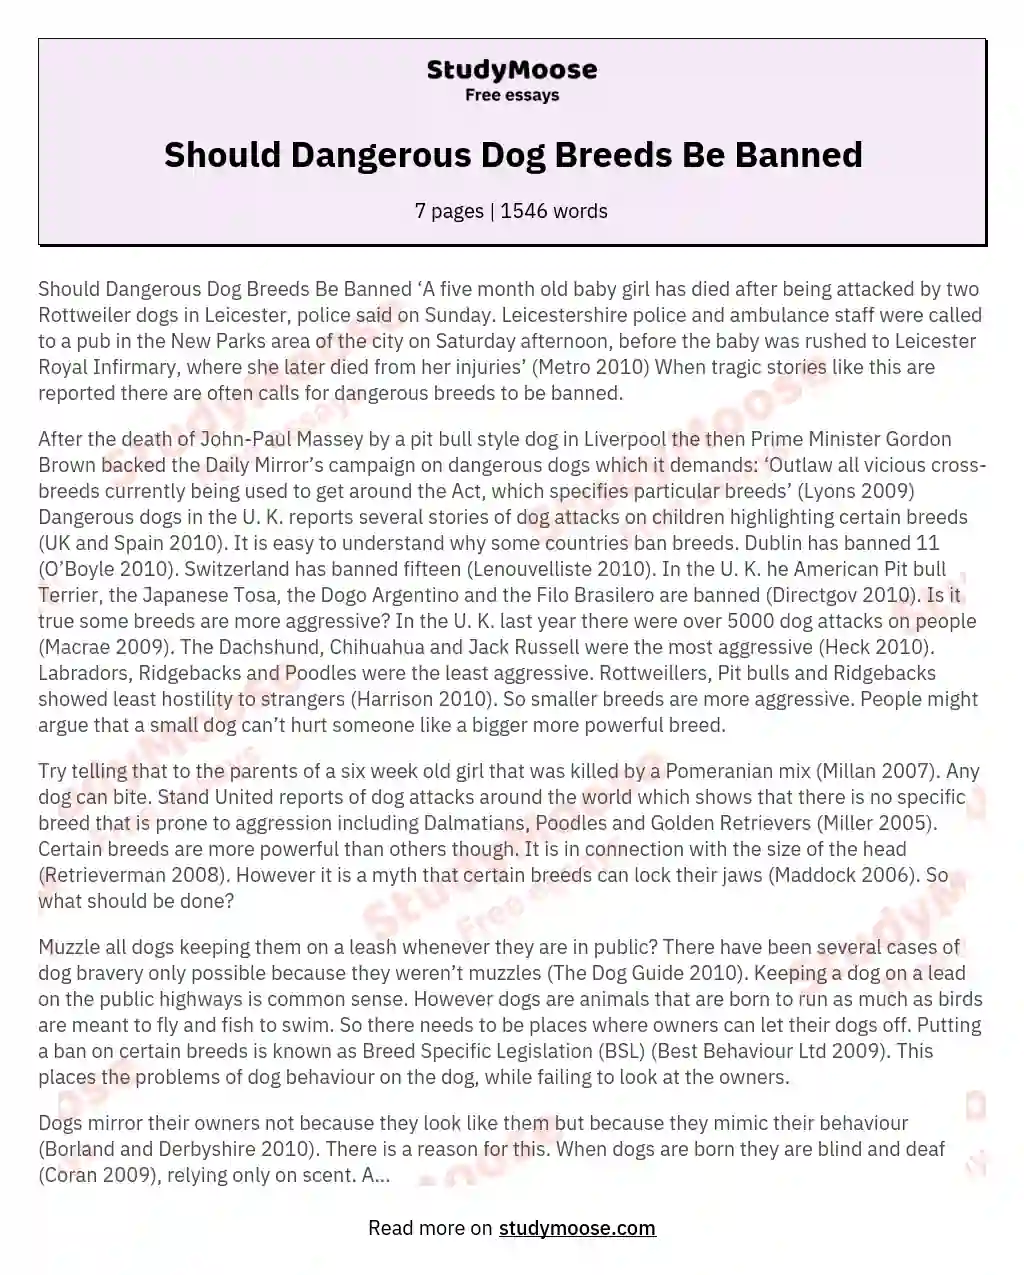 Should Dangerous Dog Breeds Be Banned essay